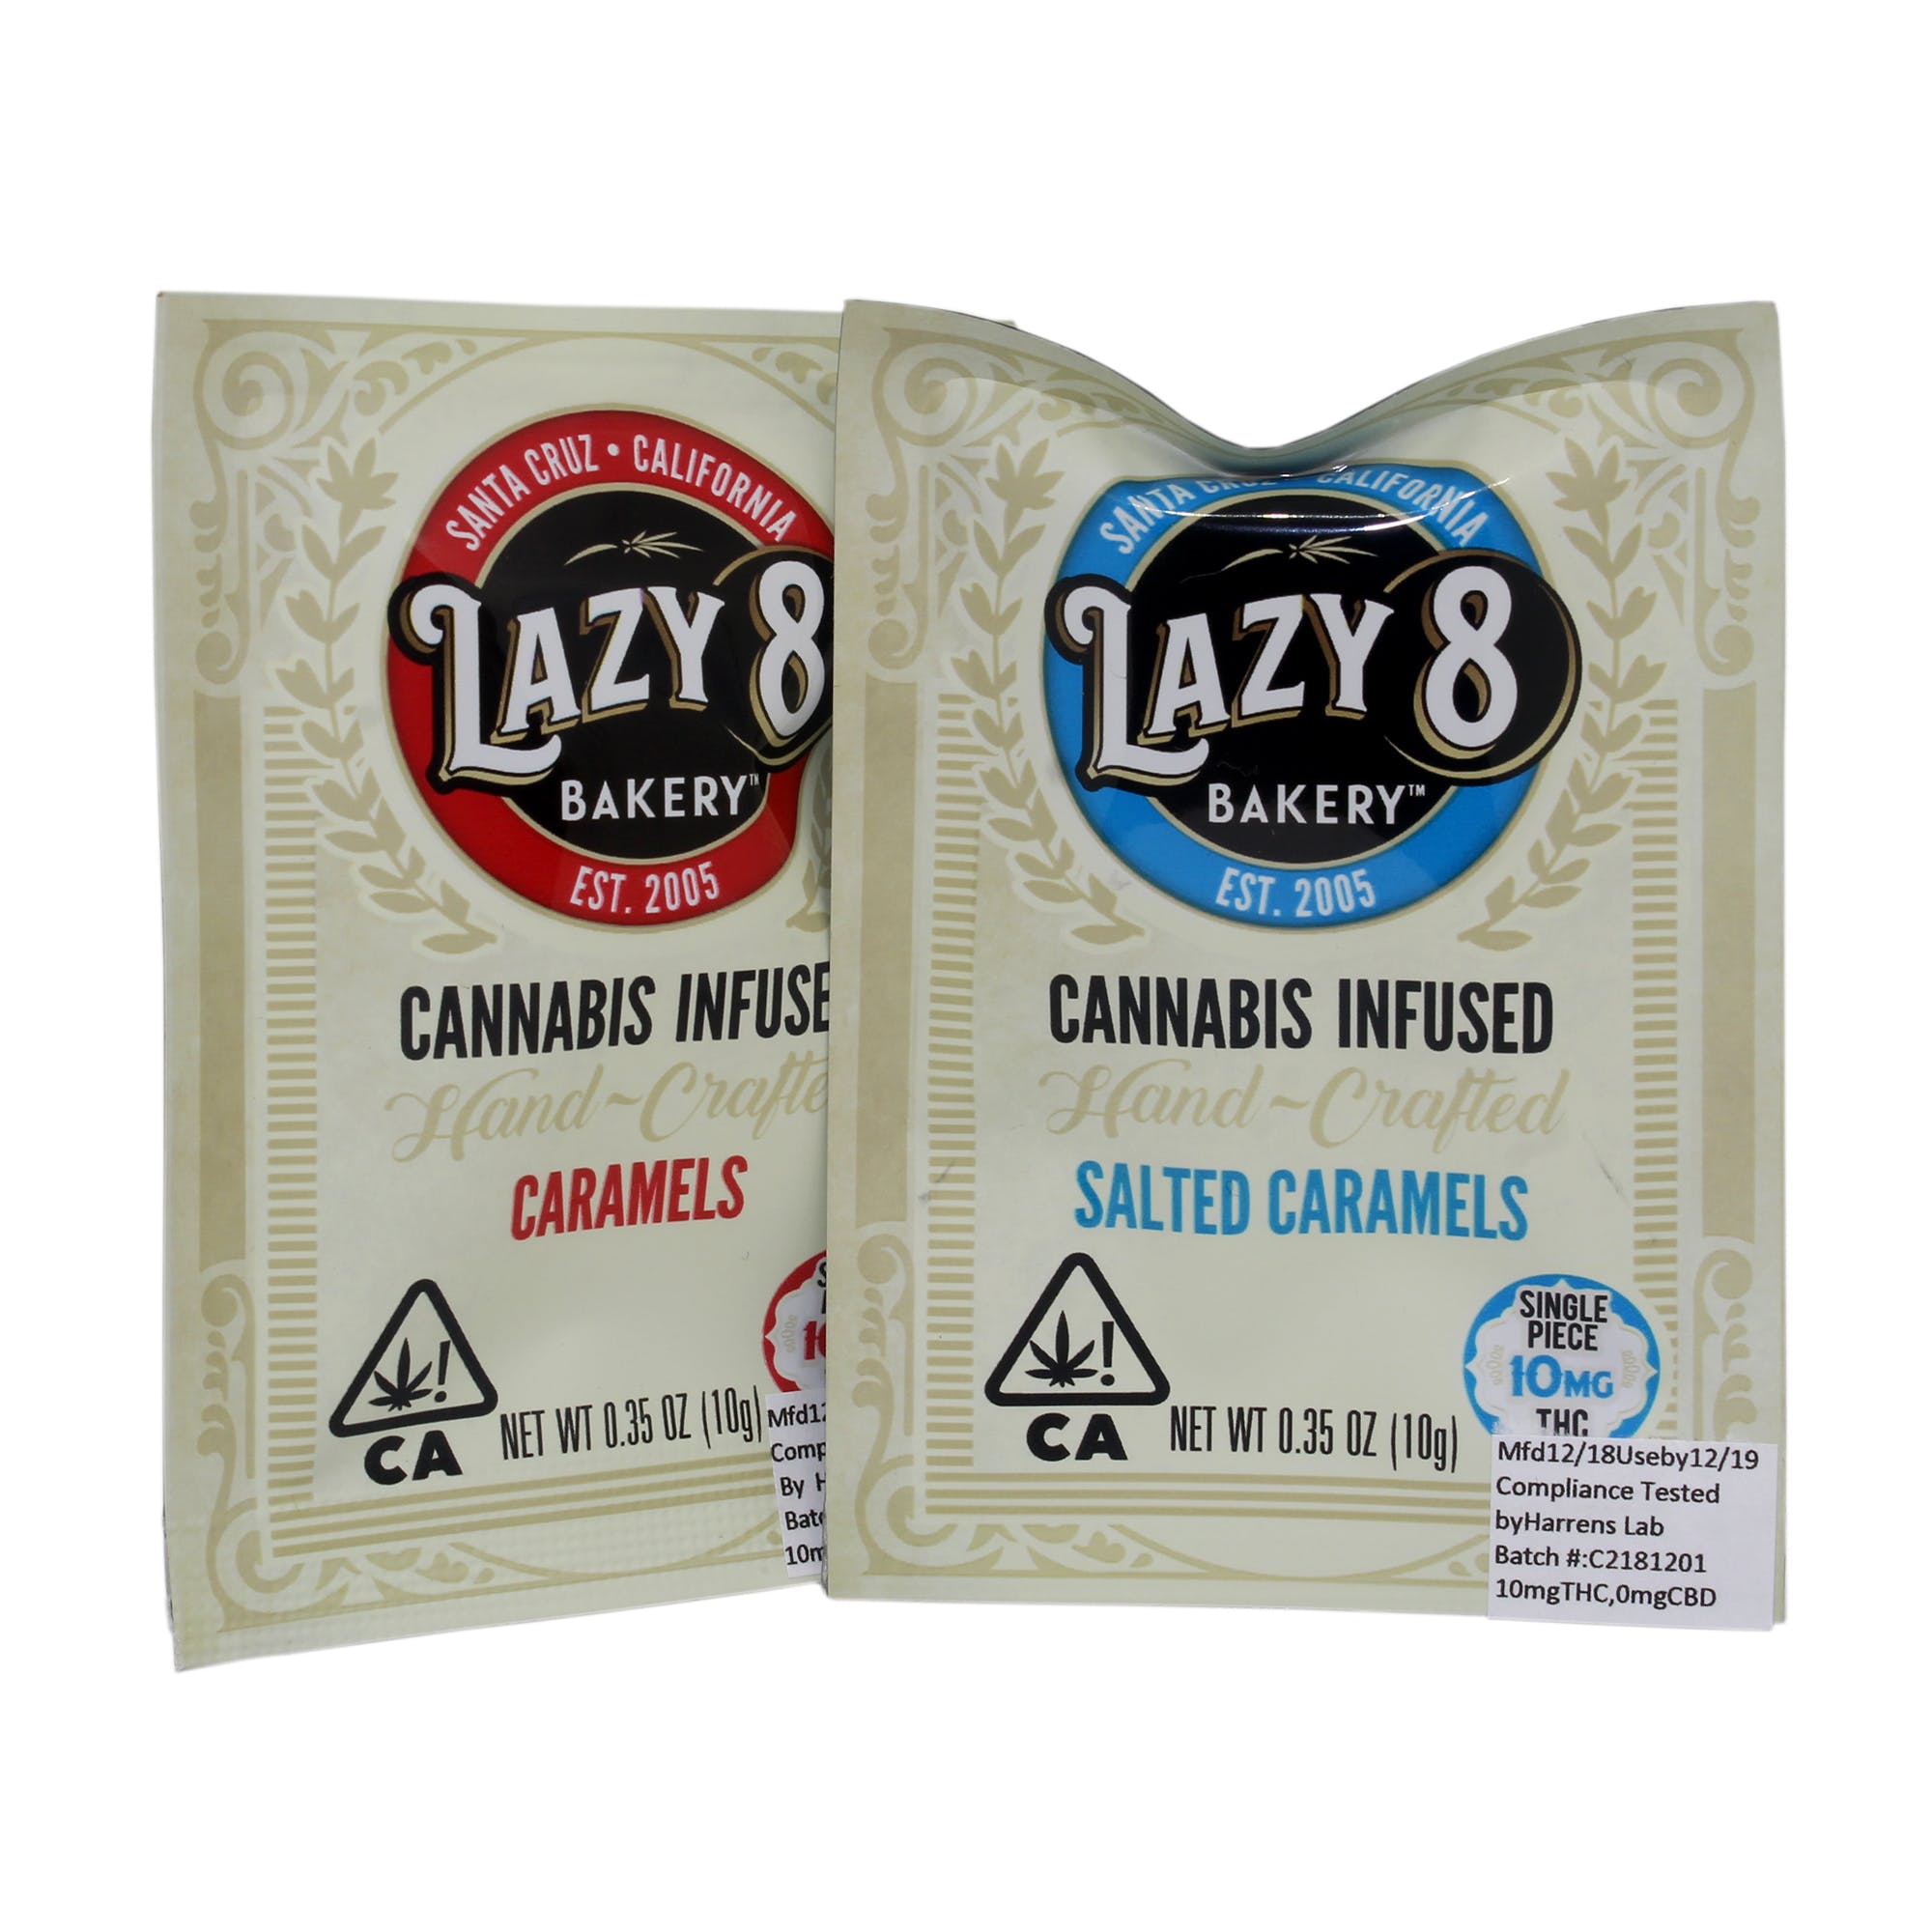 Single Dose Caramel 10mg - Lazy 8